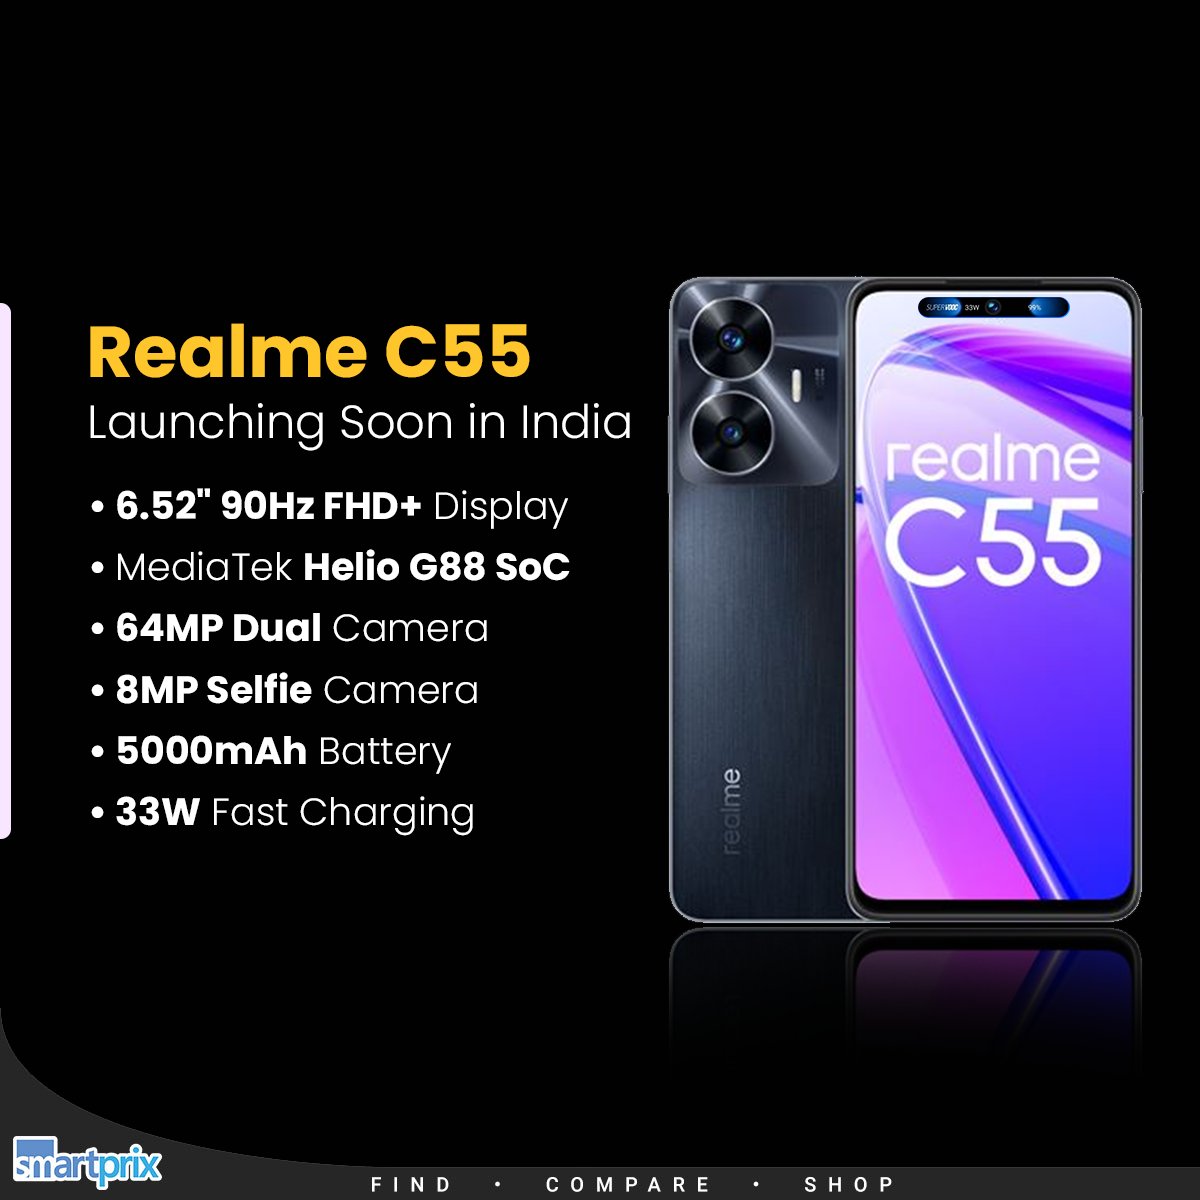 Smartprix on X: Realme C55 with iPhone's Dynamic Island-like 'Mini Capsule'  coming soon #Realme #RealmeC55 #MiniCapsule  / X